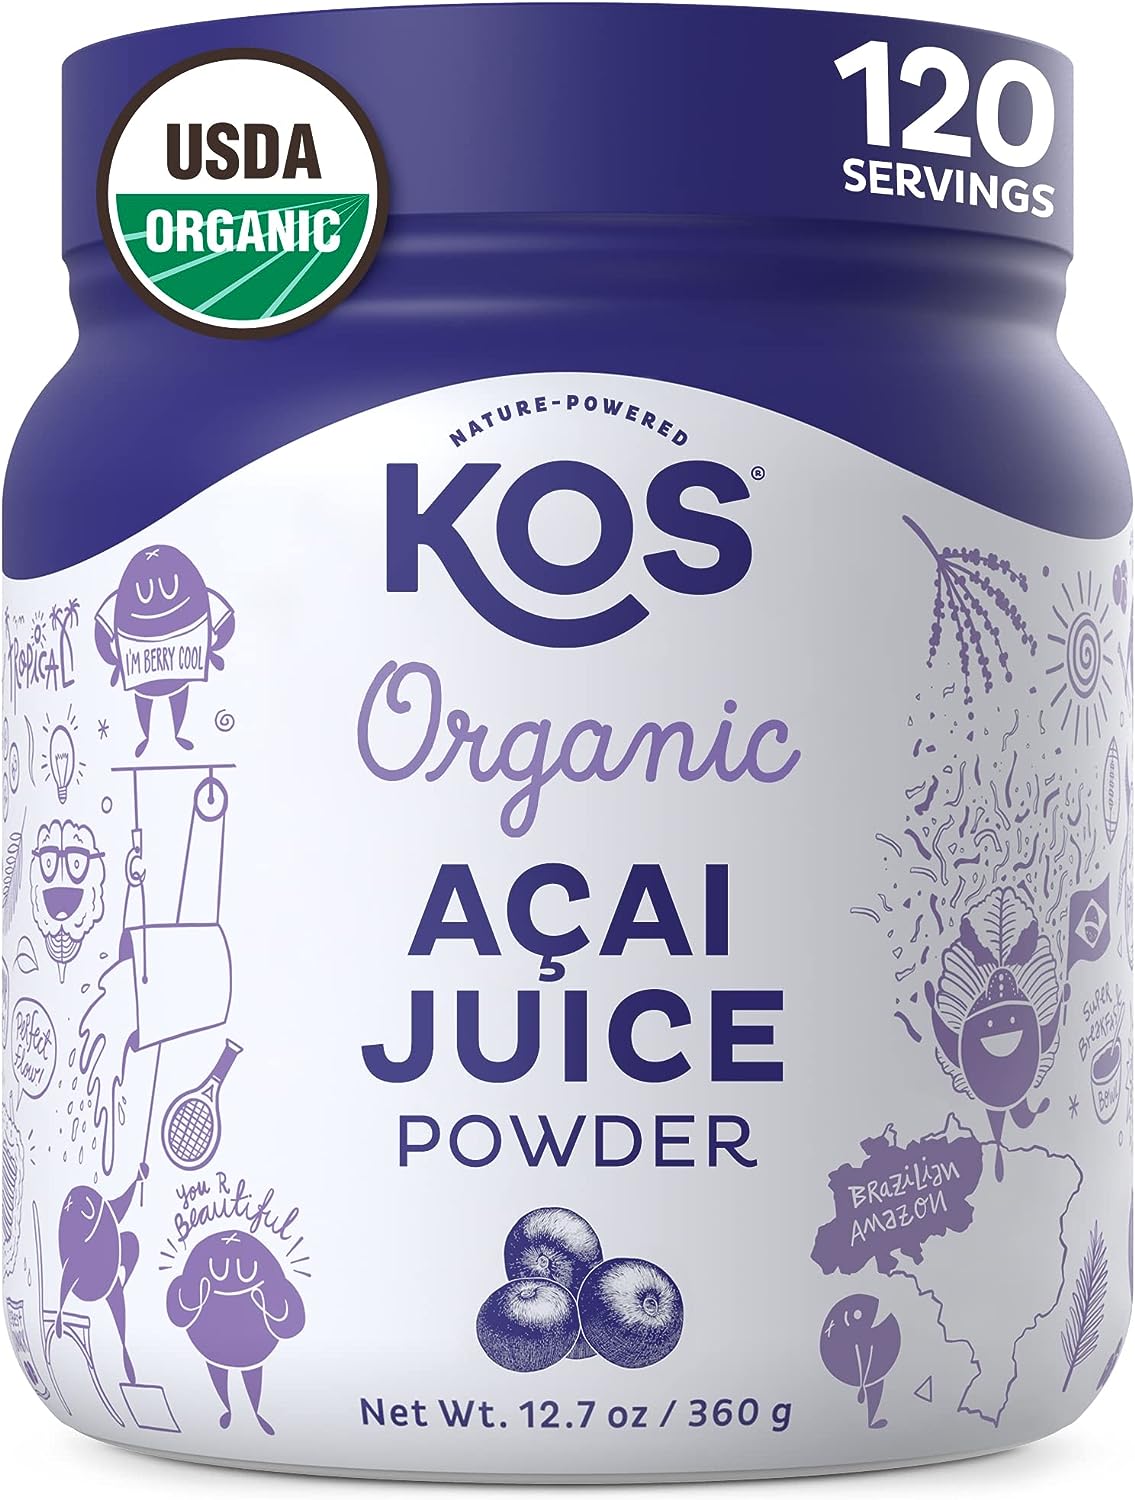 KOS Organic Acai Powder, Unsweetened Superfood - Natural Antioxidant Powder from Acai Berry, Great for Smoothies and Bowls - Polyphenol Abundant, USDA, Gluten-Free, Non-GMO - 12.7 oz, 120 Servings